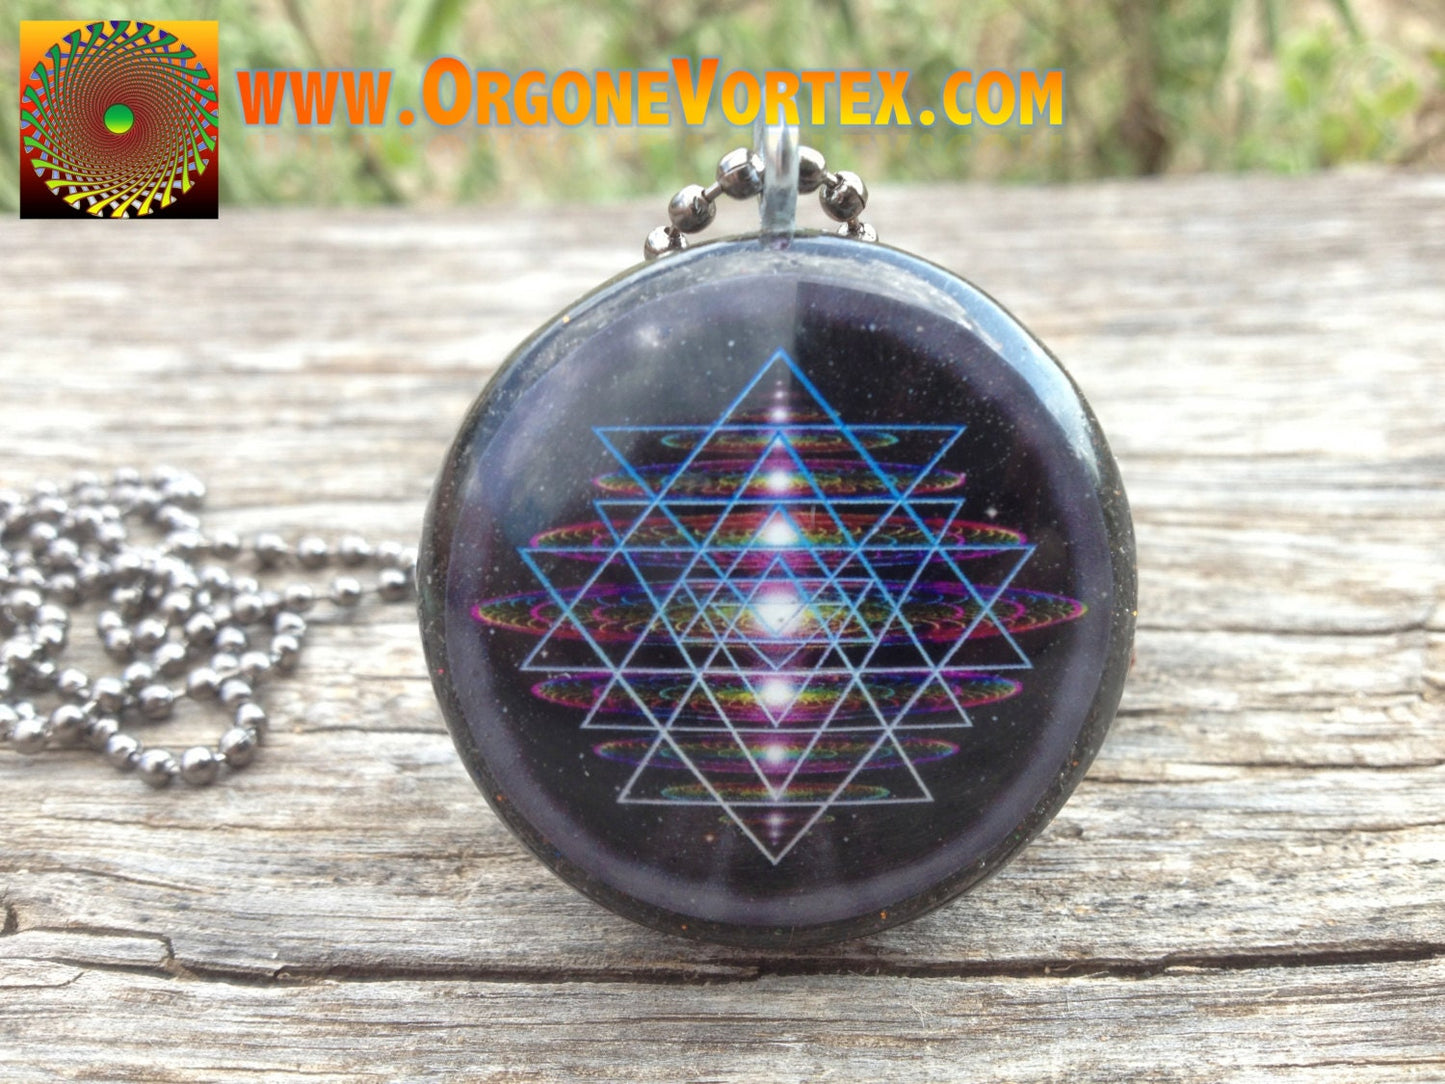 Cosmic Shri Yantra Silver Pendant Necklace